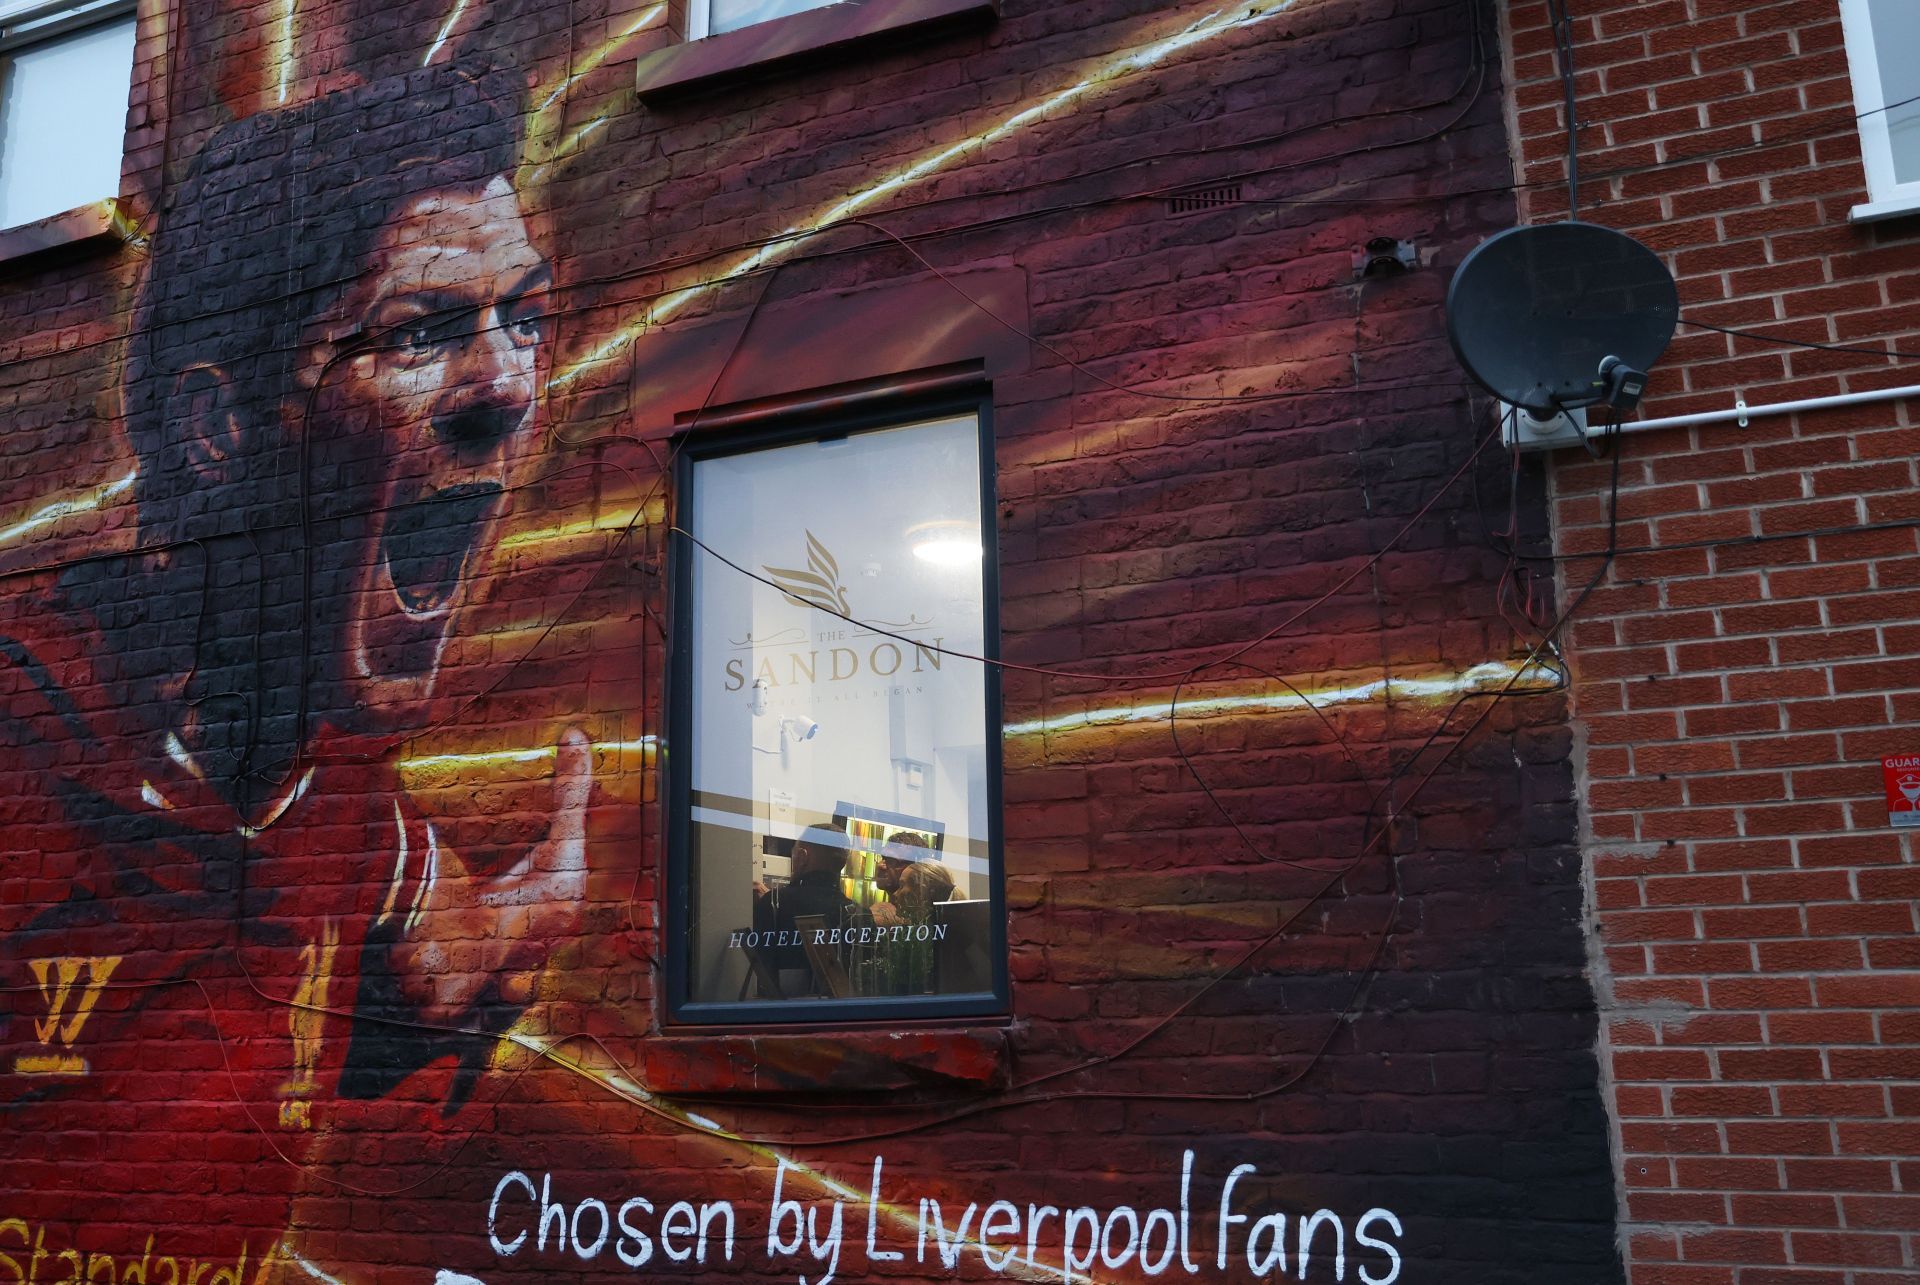 A mural of Steven Gerrard in Liverpool